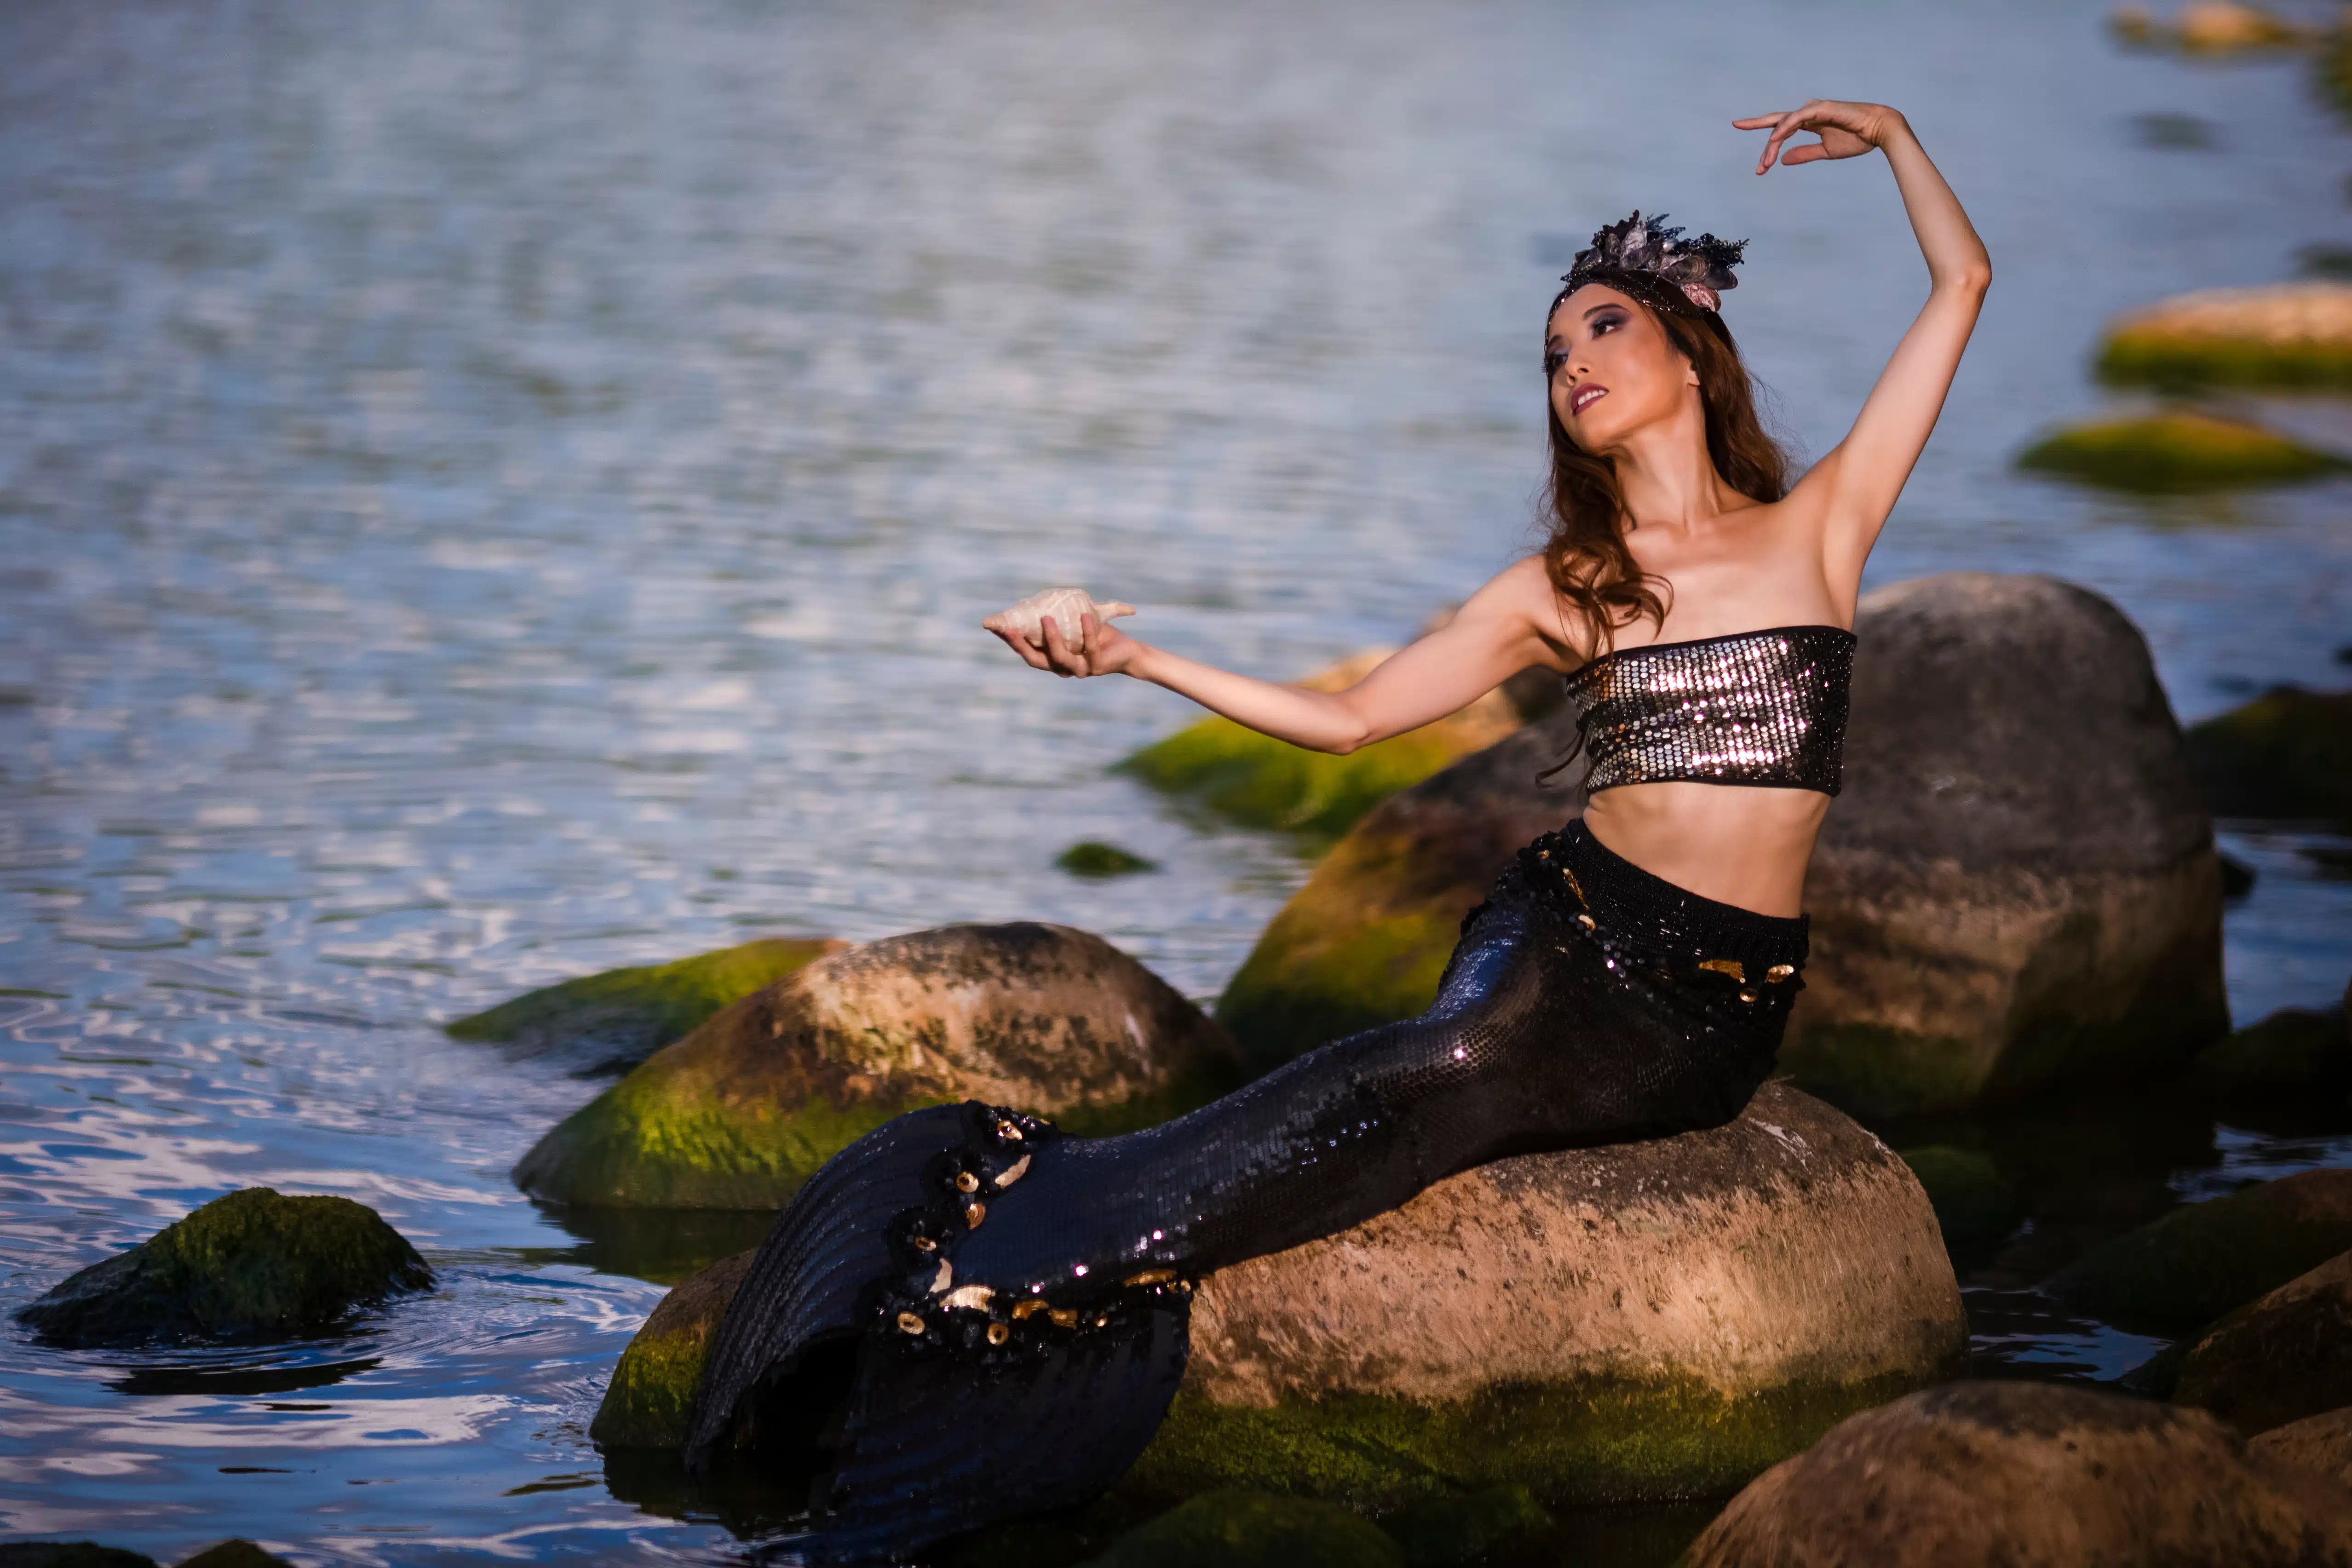 Dancing Asian Mermaid Posing With Seashell At Sea Shore on Rocks